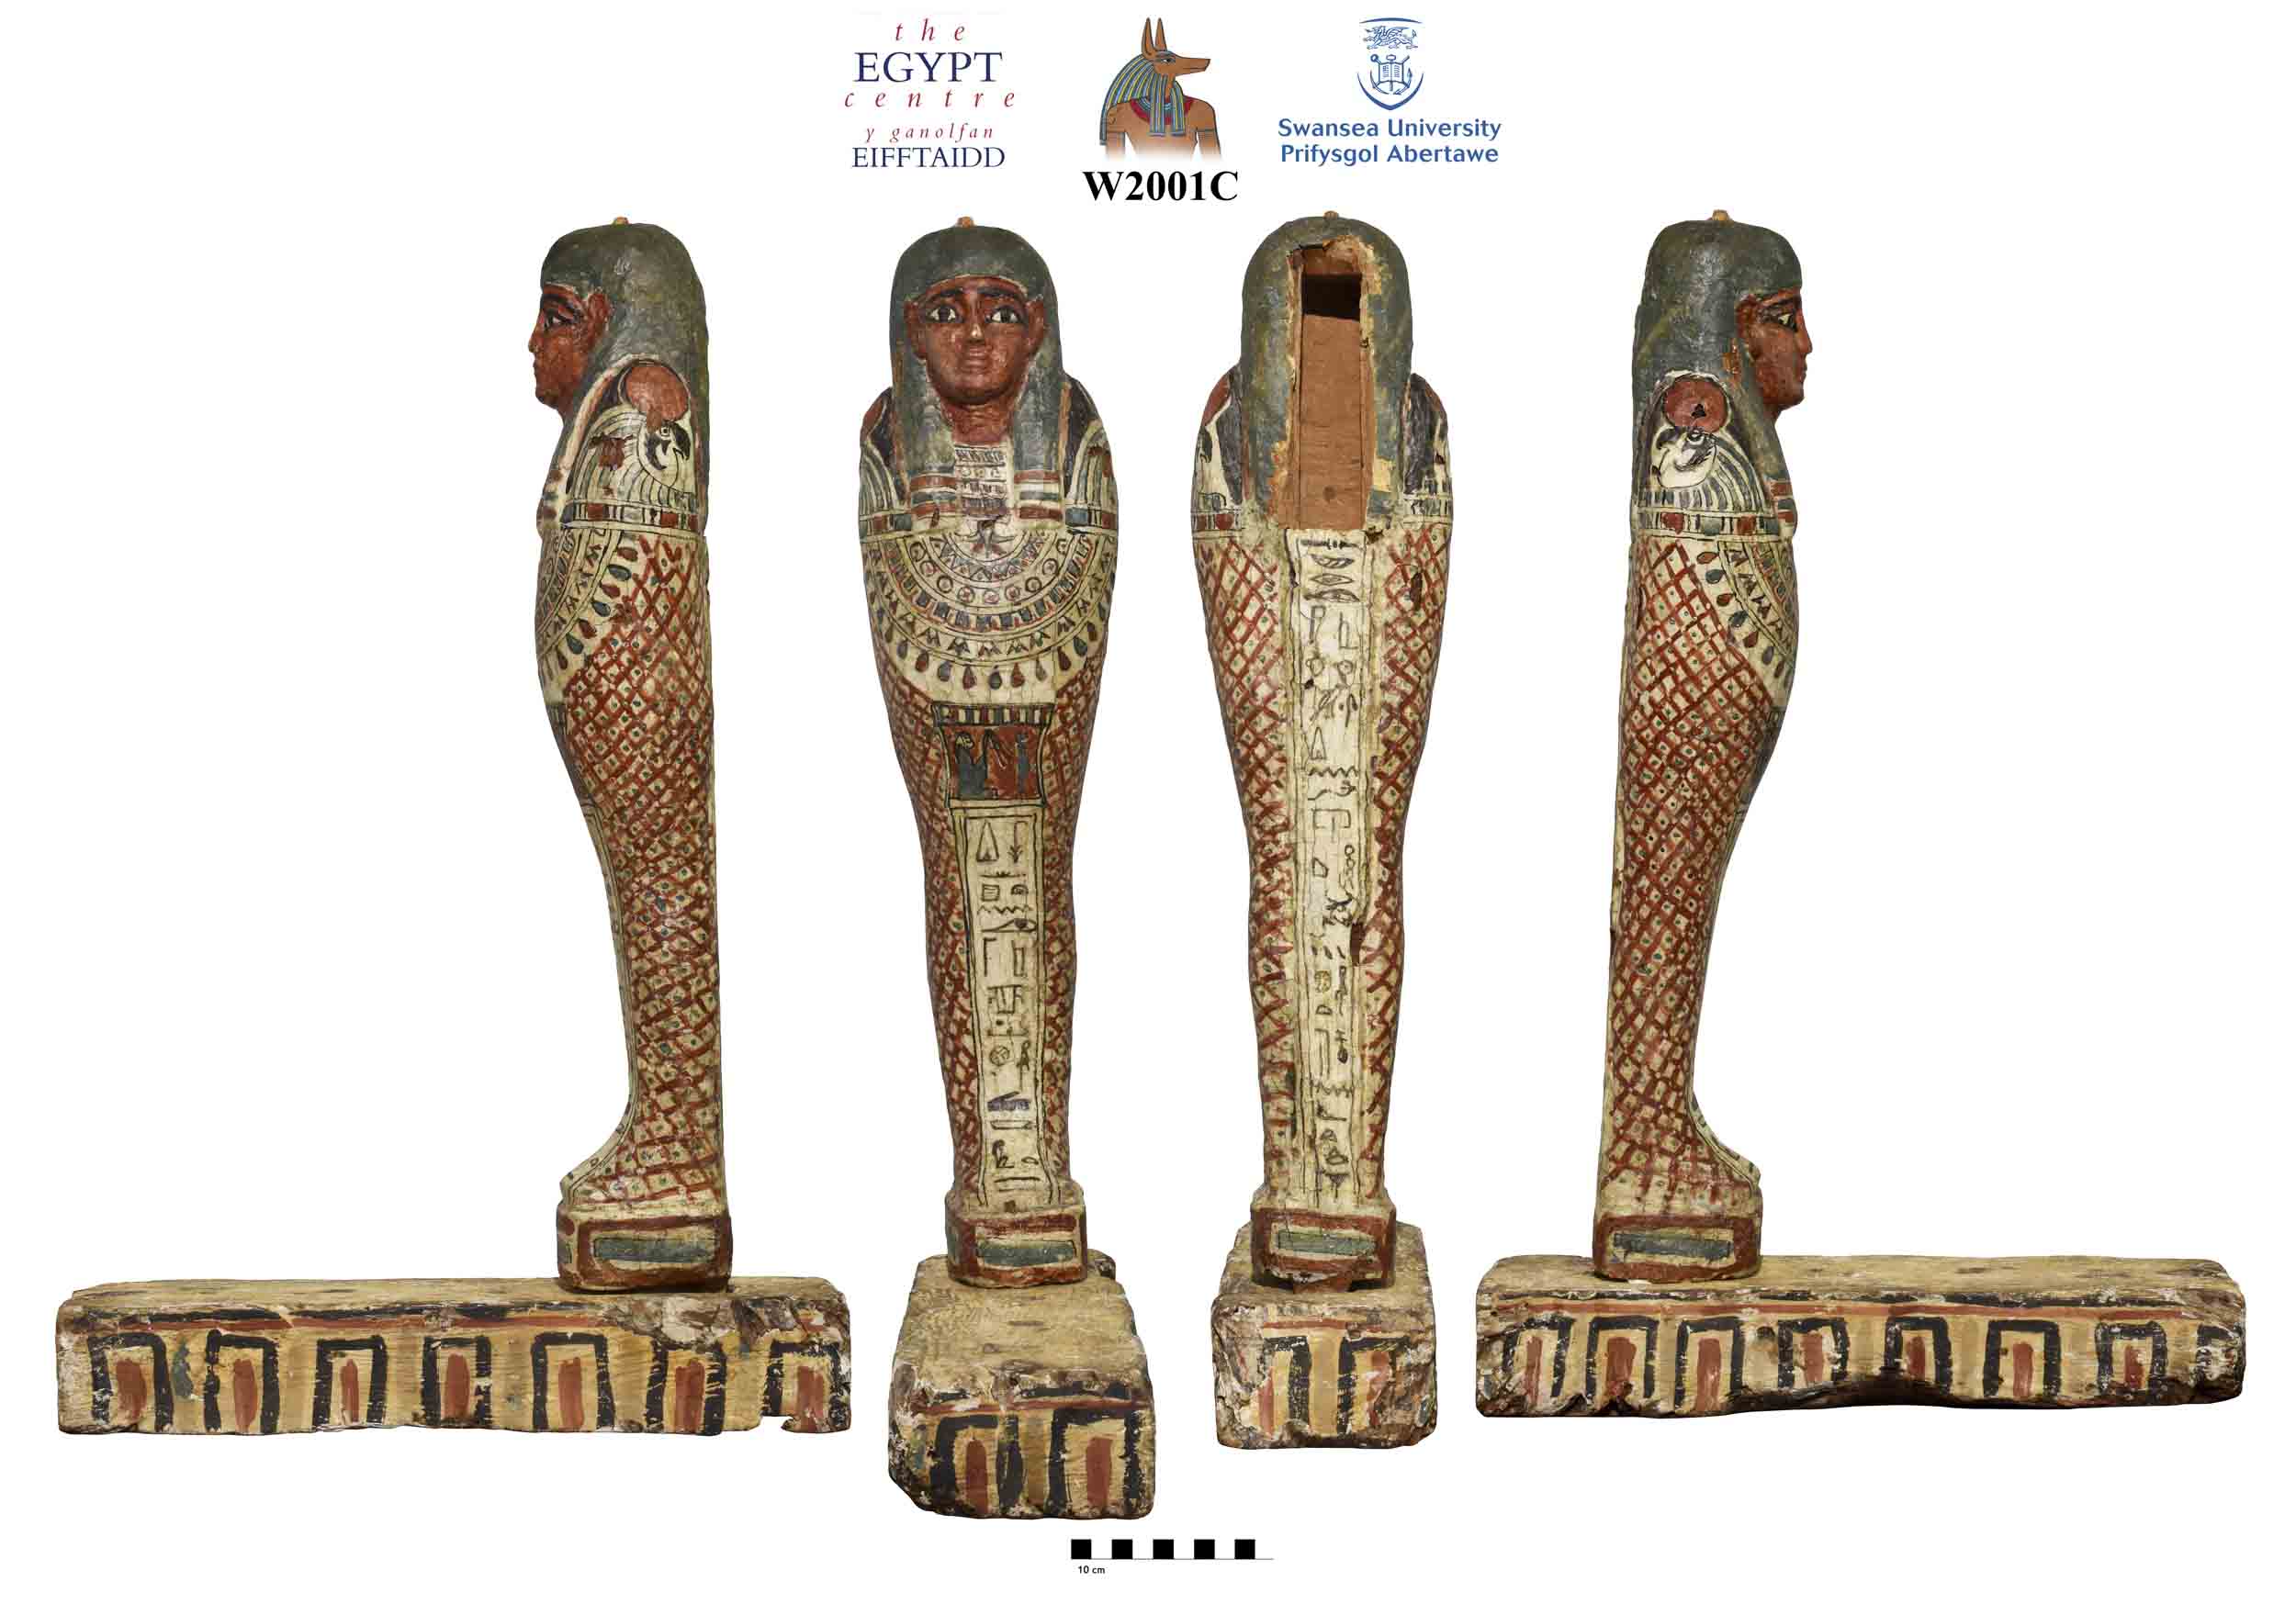 Image for: Ptah-Sokar-Osiris figure